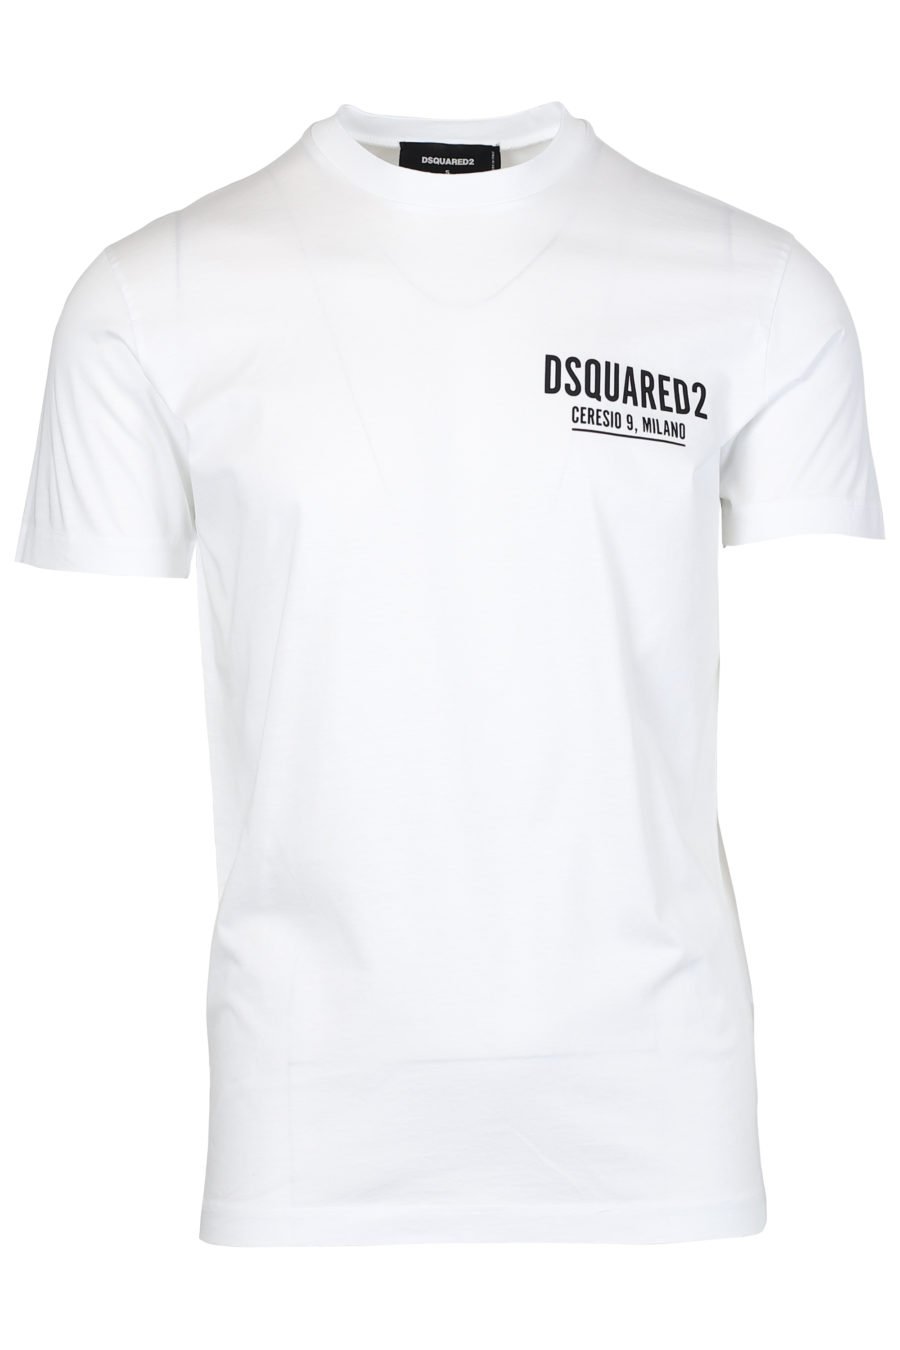 T-shirt branca com pequeno logótipo "Ceresio 9" - IMG 2435